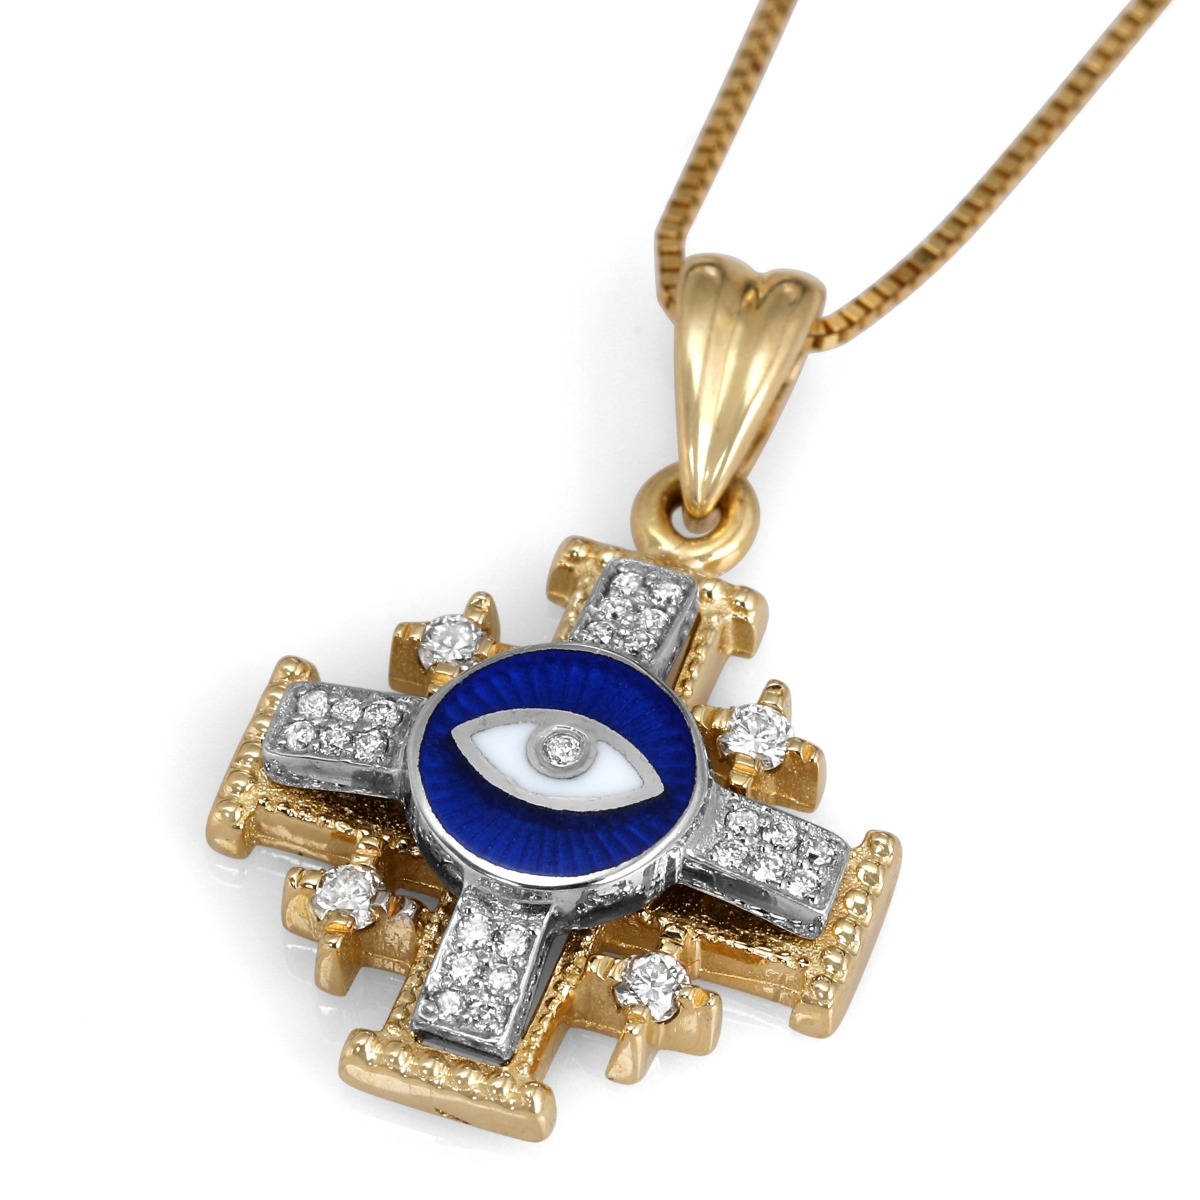 Two-Tone 14K Gold and Enamel Evil Eye Jerusalem Cross Pendant with 29 Diamonds - 1